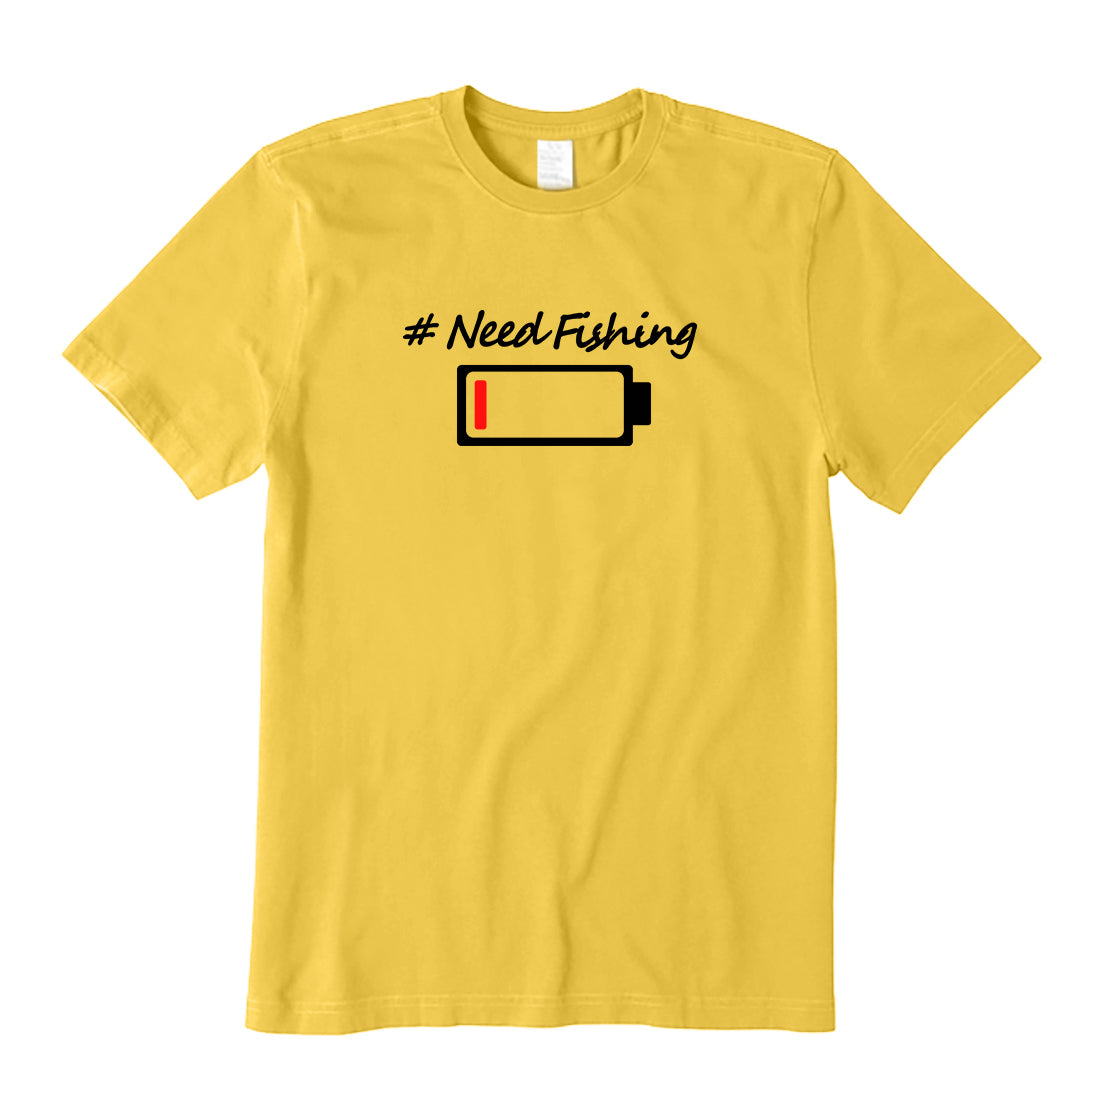 NeedFishing T-Shirt